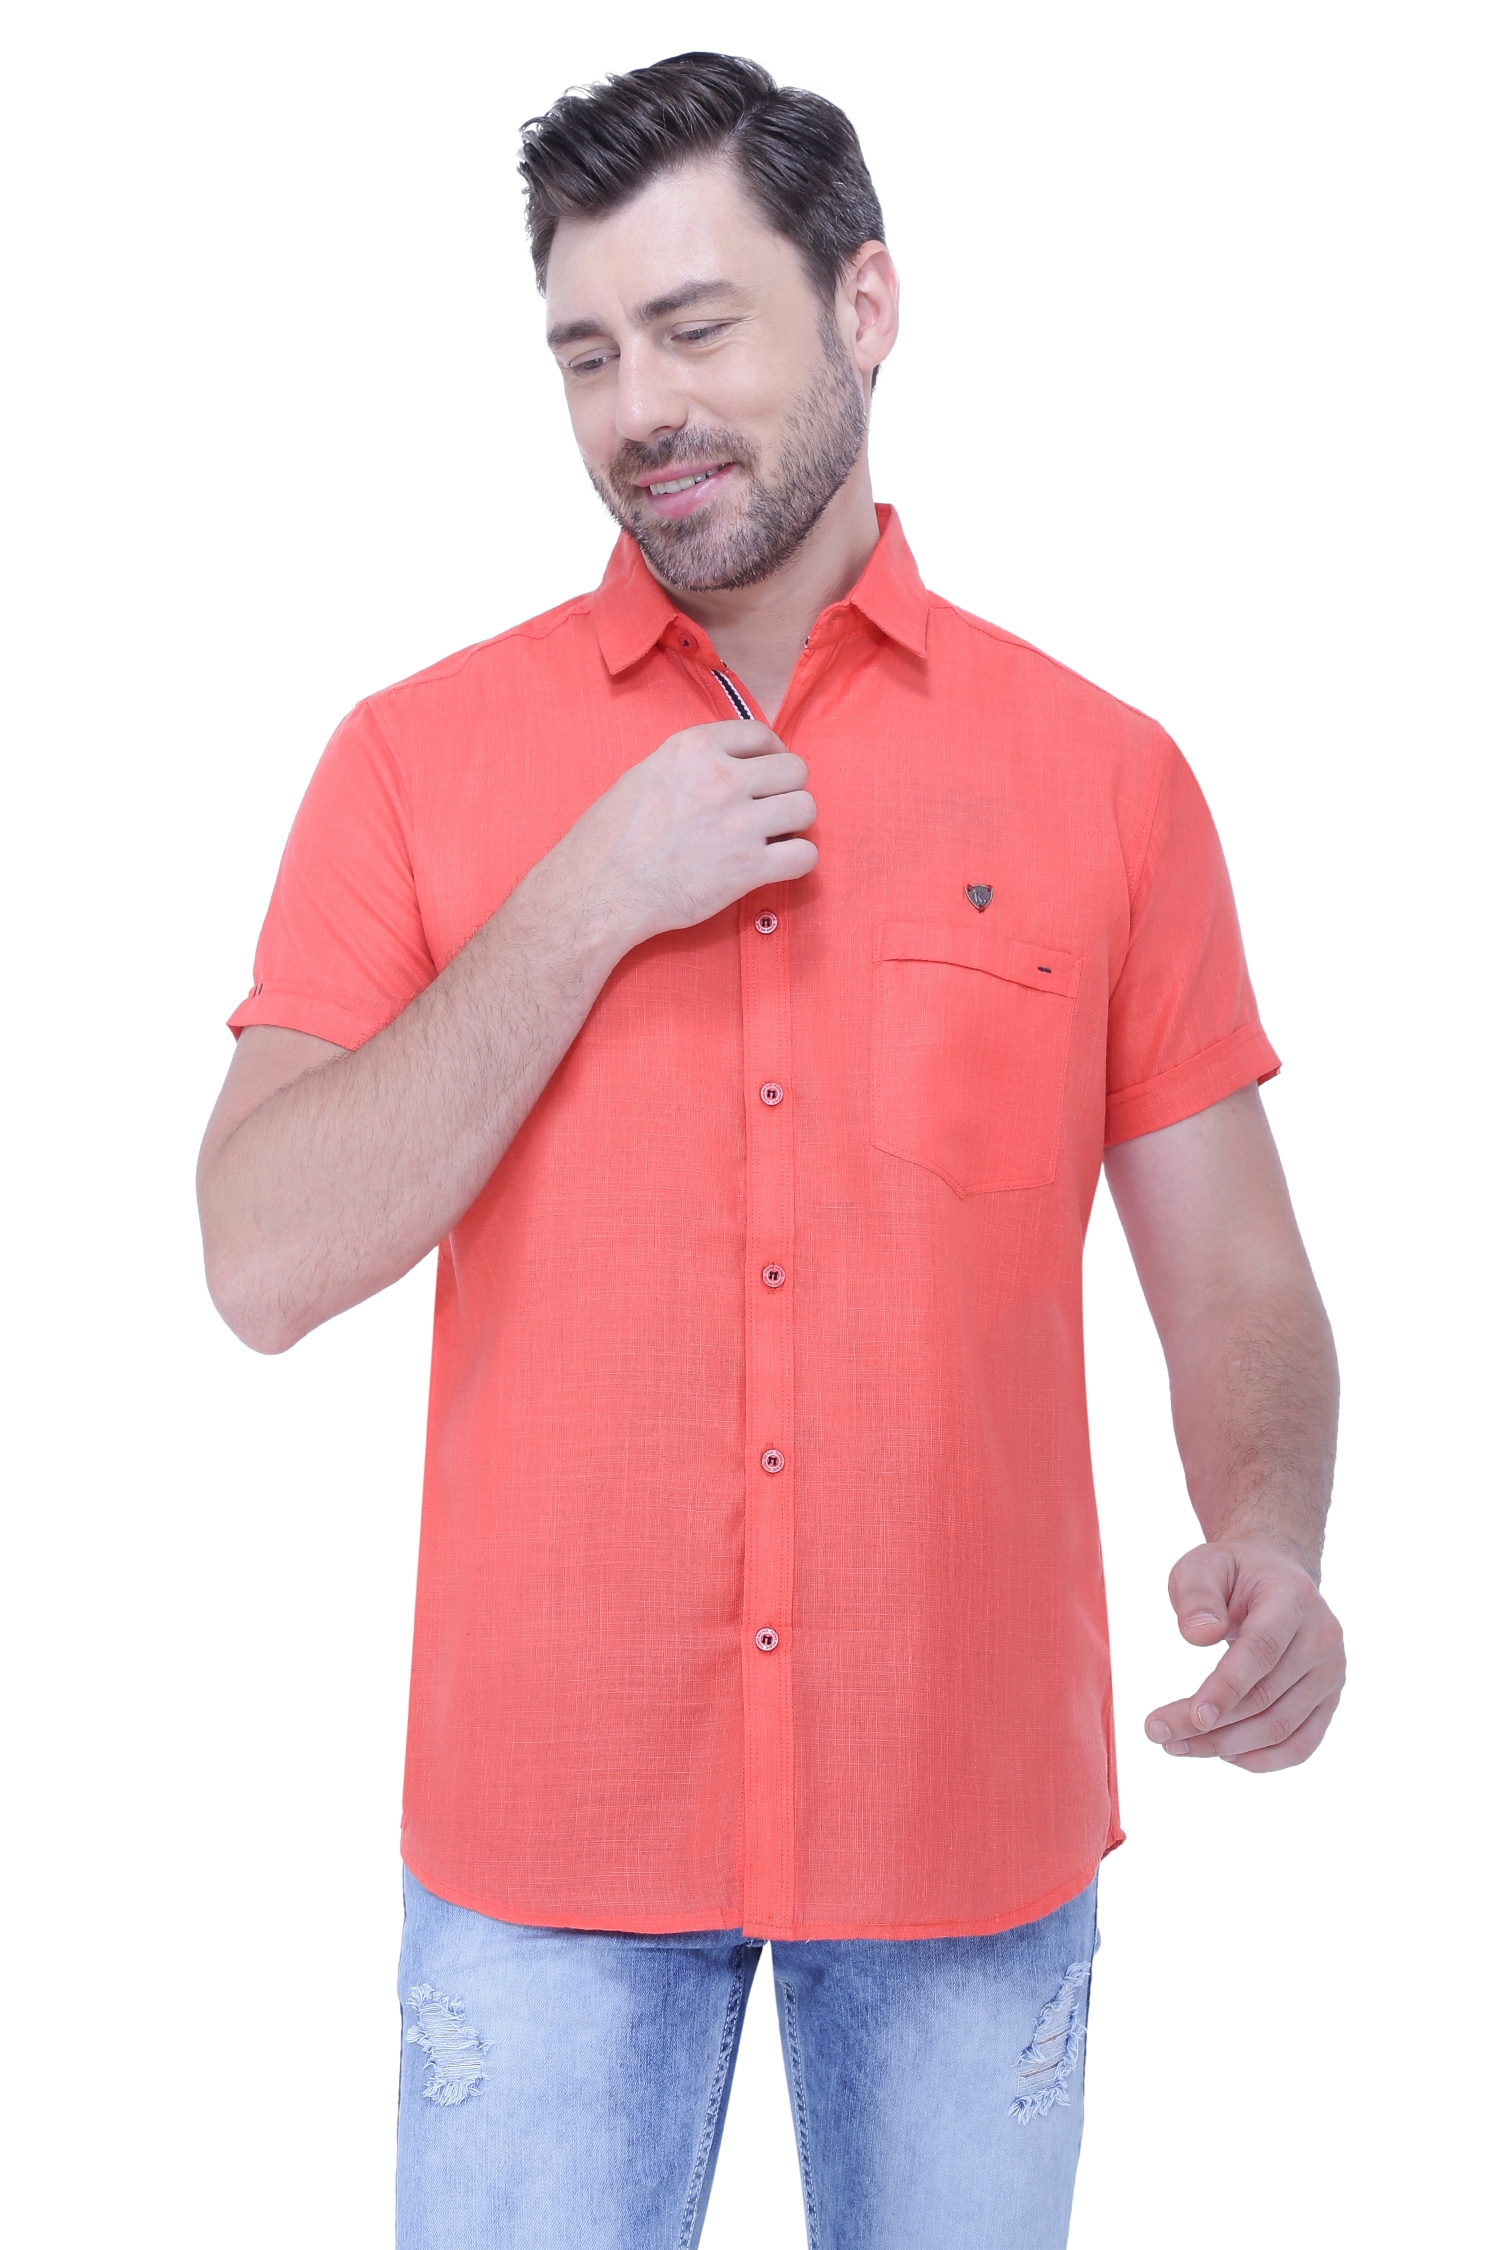 Kuons Avenue | Kuons Avenue Men's Linen Blend Half Sleeves Casual Shirt-KACLHS1233 0